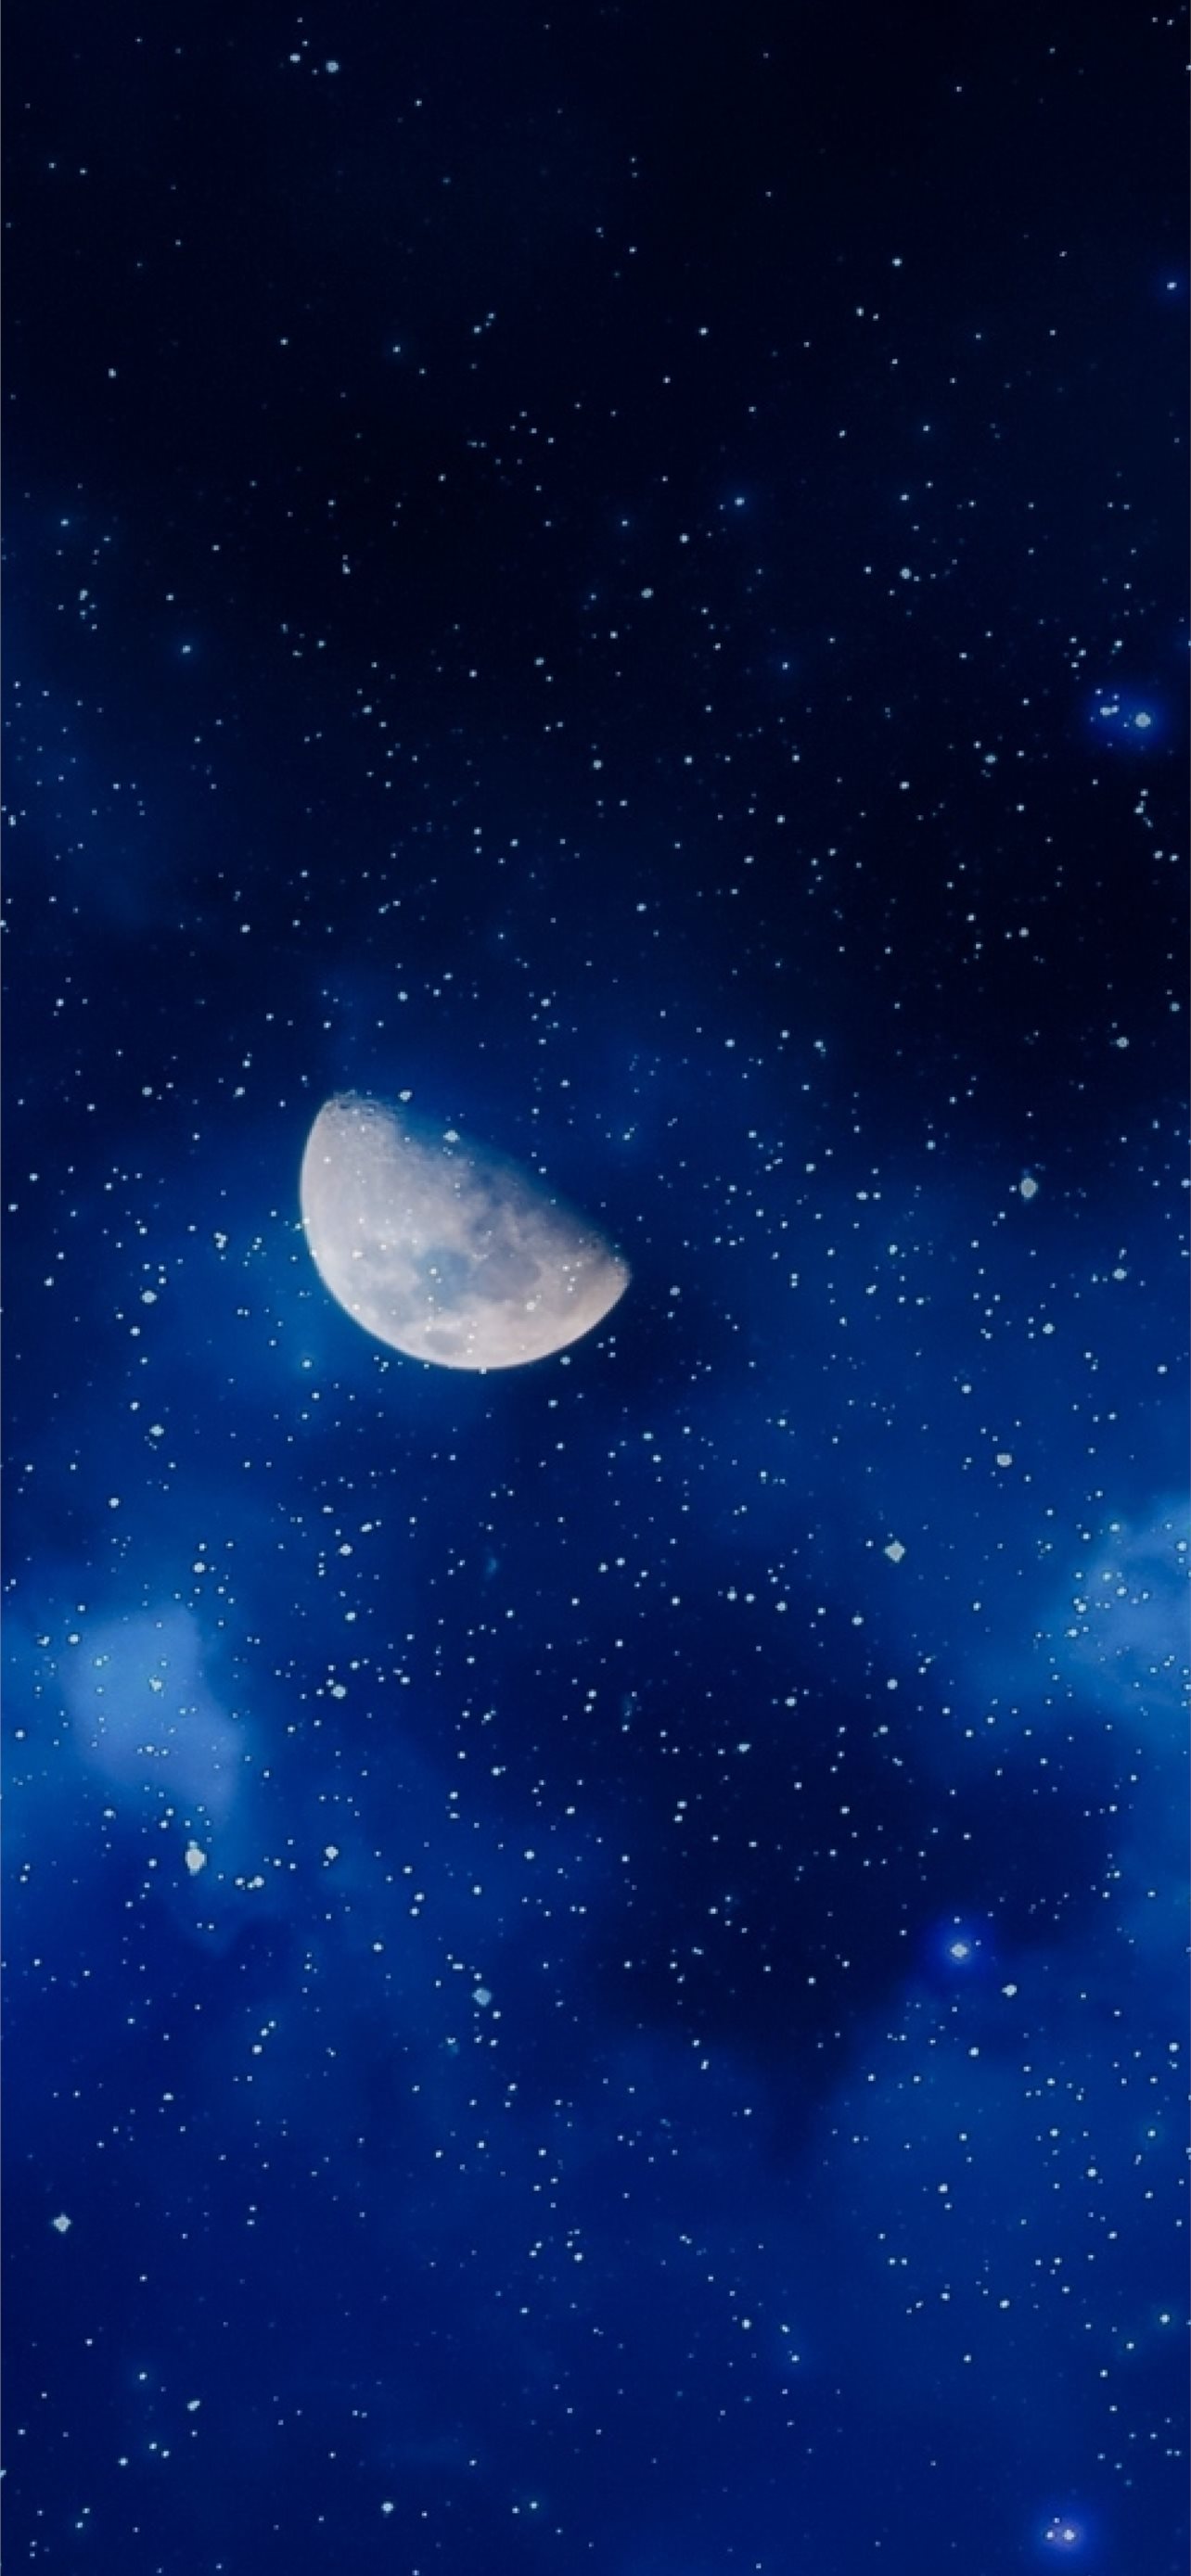 Cute Moon Iphone Wallpapers